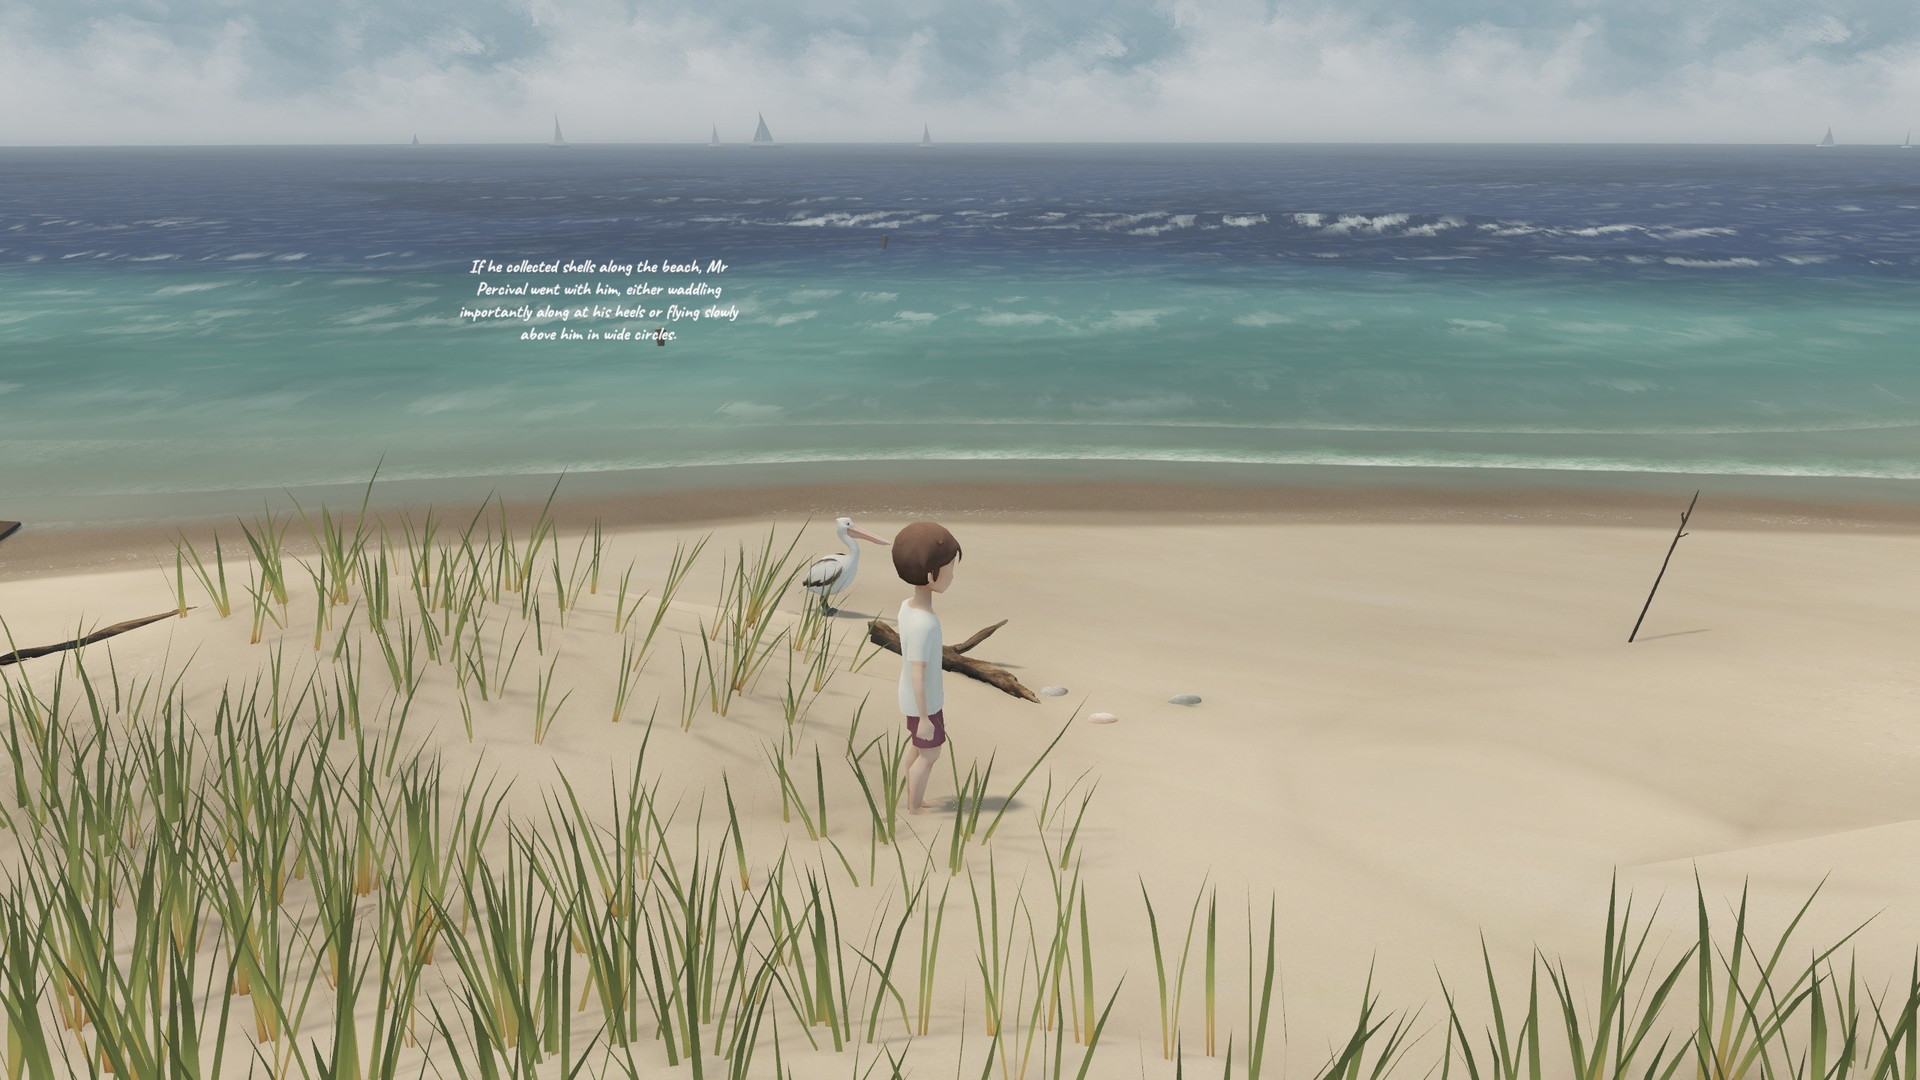 Storm Boy: The Game - screenshot 15